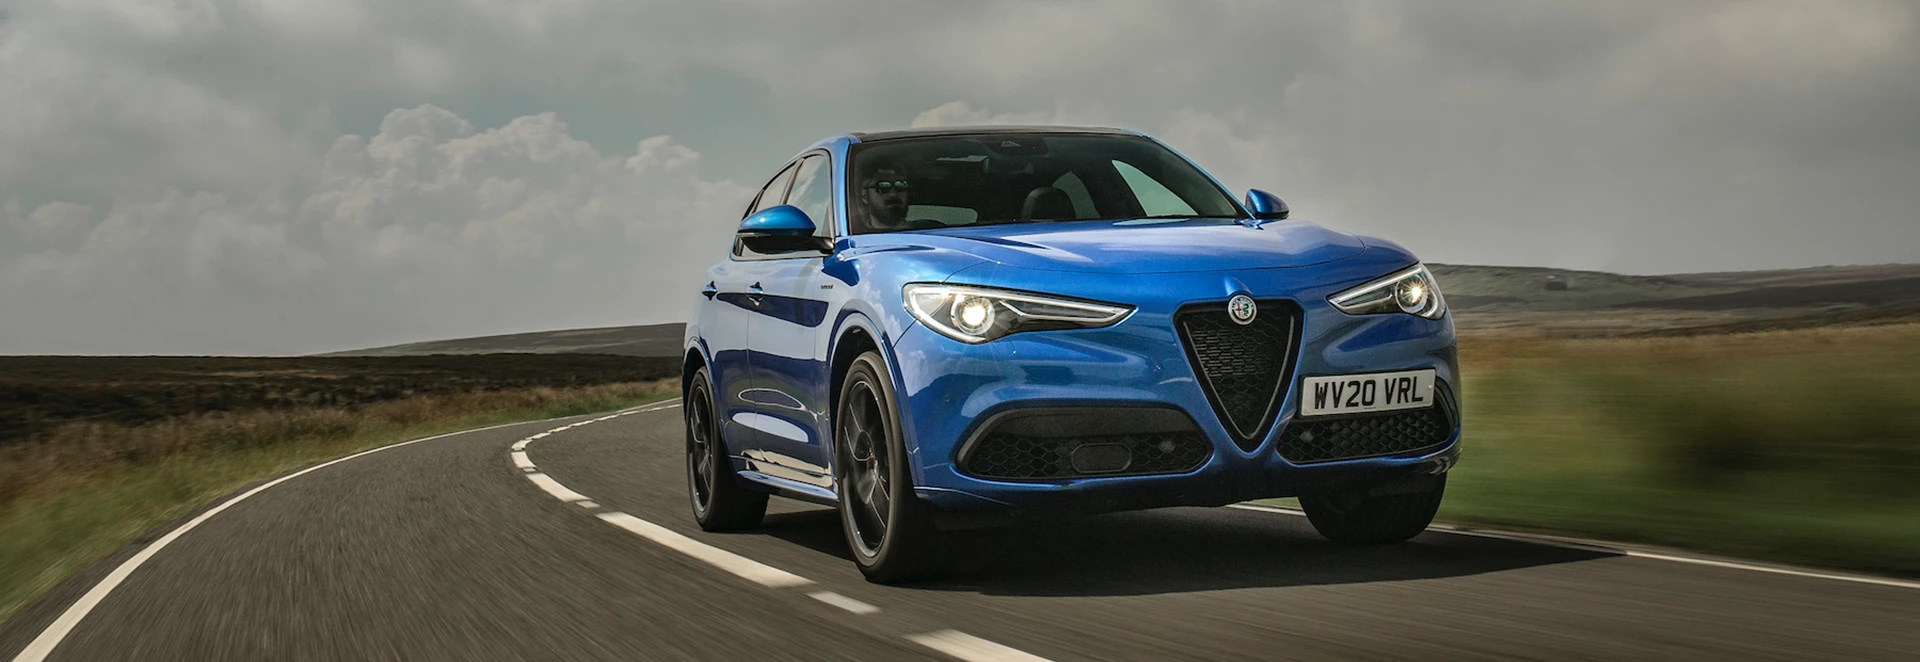 5 reasons why the Alfa Romeo Stelvio Quadrifoglio is the ultimate performance SUV 